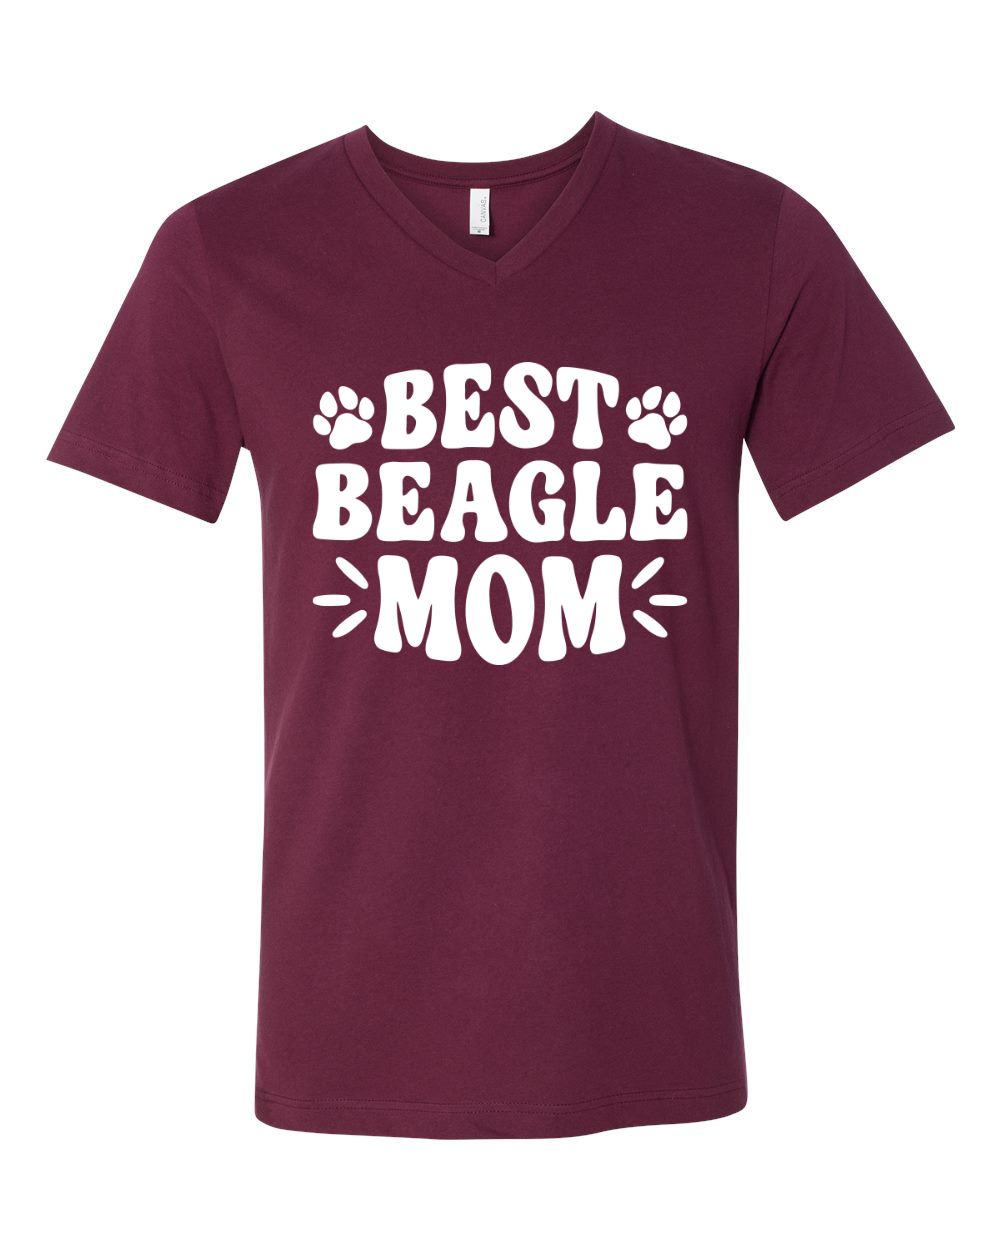 Best Beagle Mom V-Neck